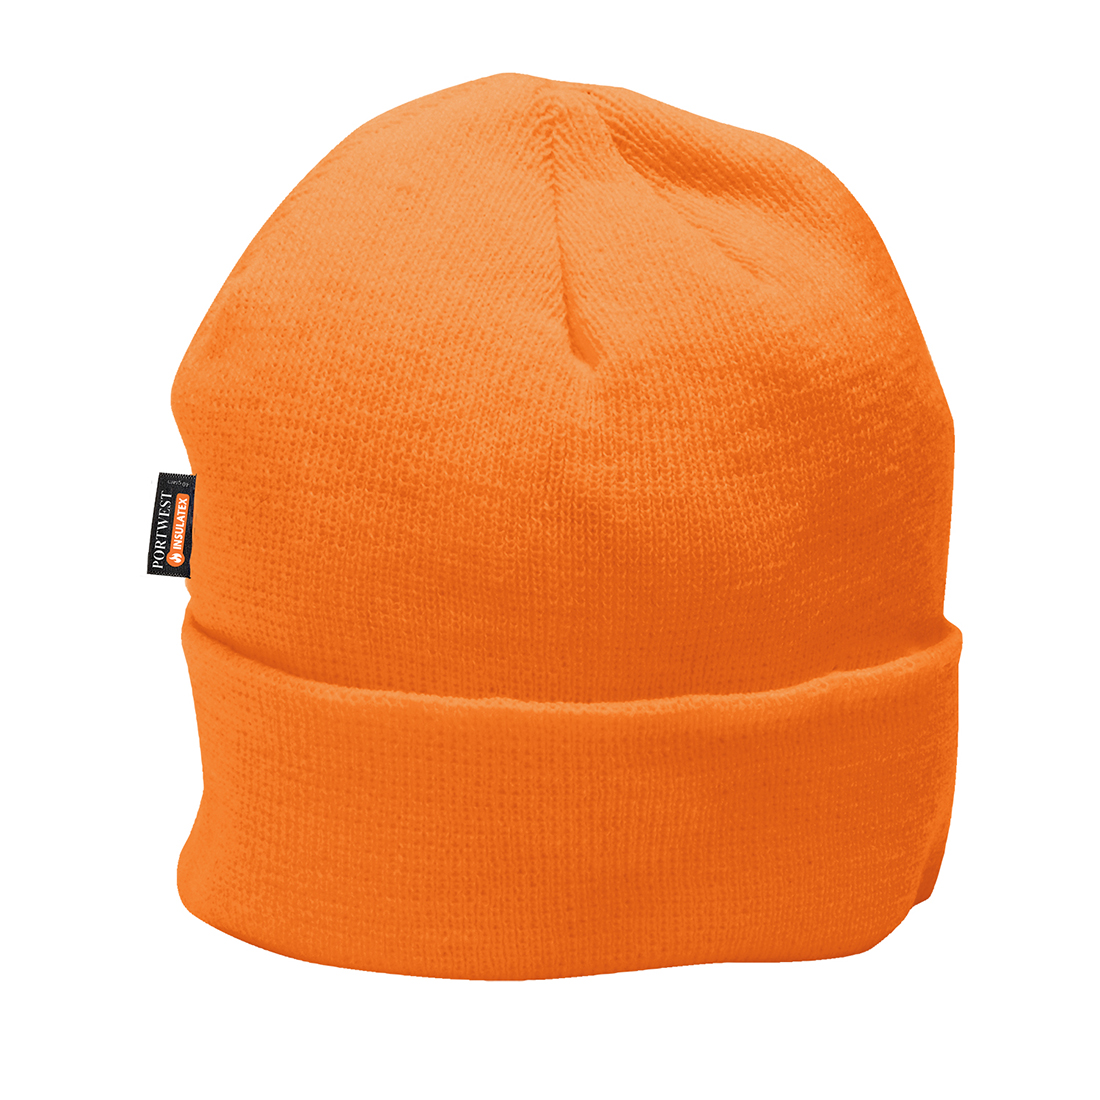 Zateplená čepice Insulatex Barva: oranžová